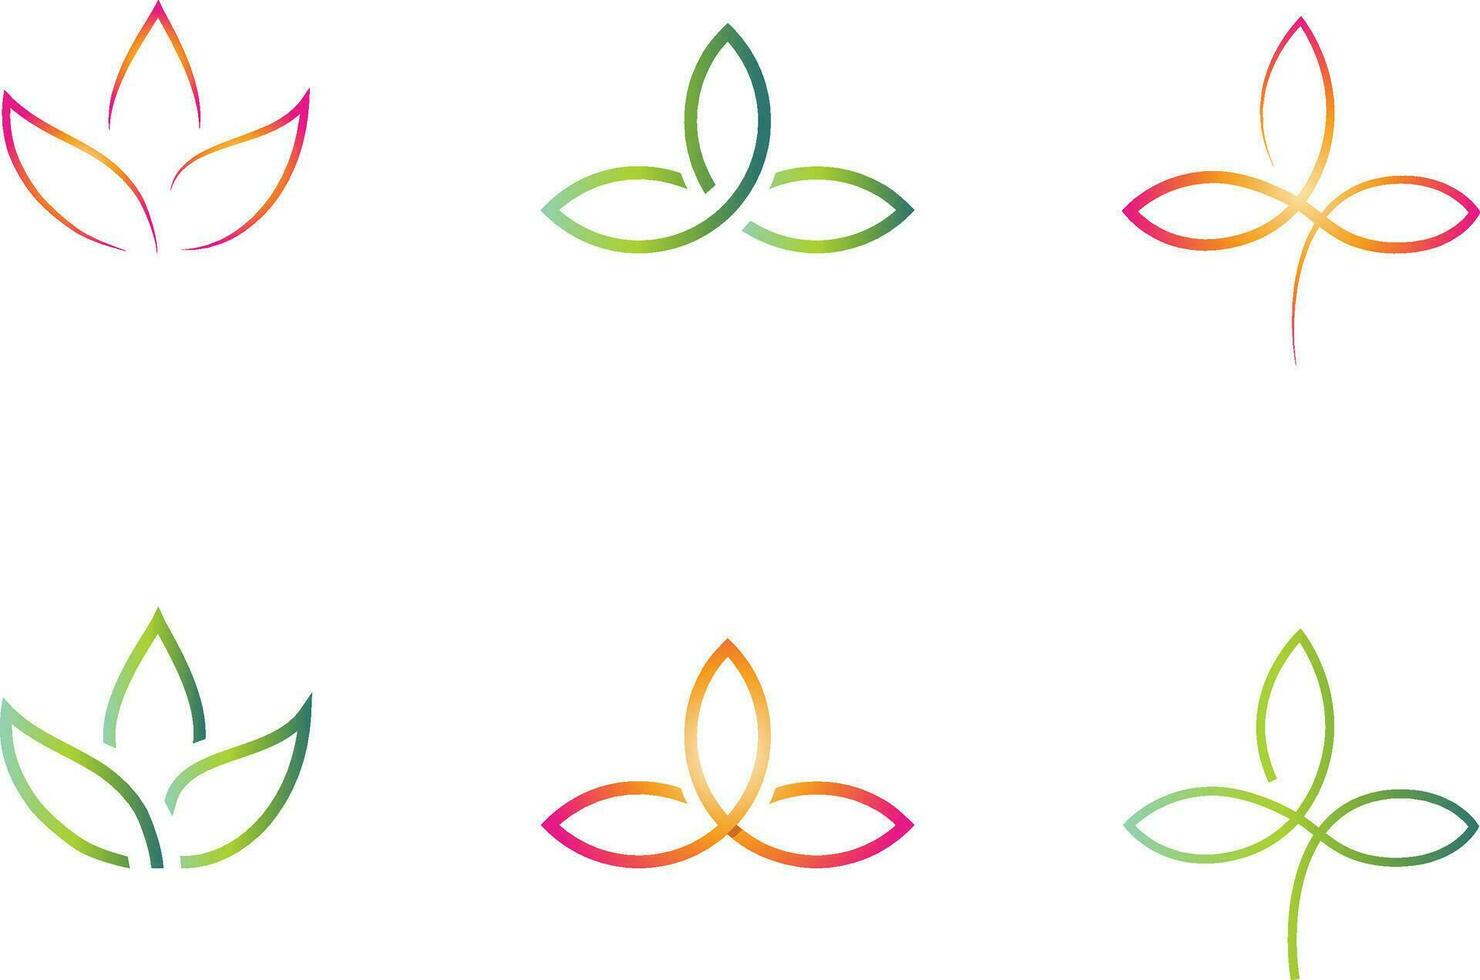 Ayurveda yoga spa purity meditation calm lotus company logo orange green bright colors vector